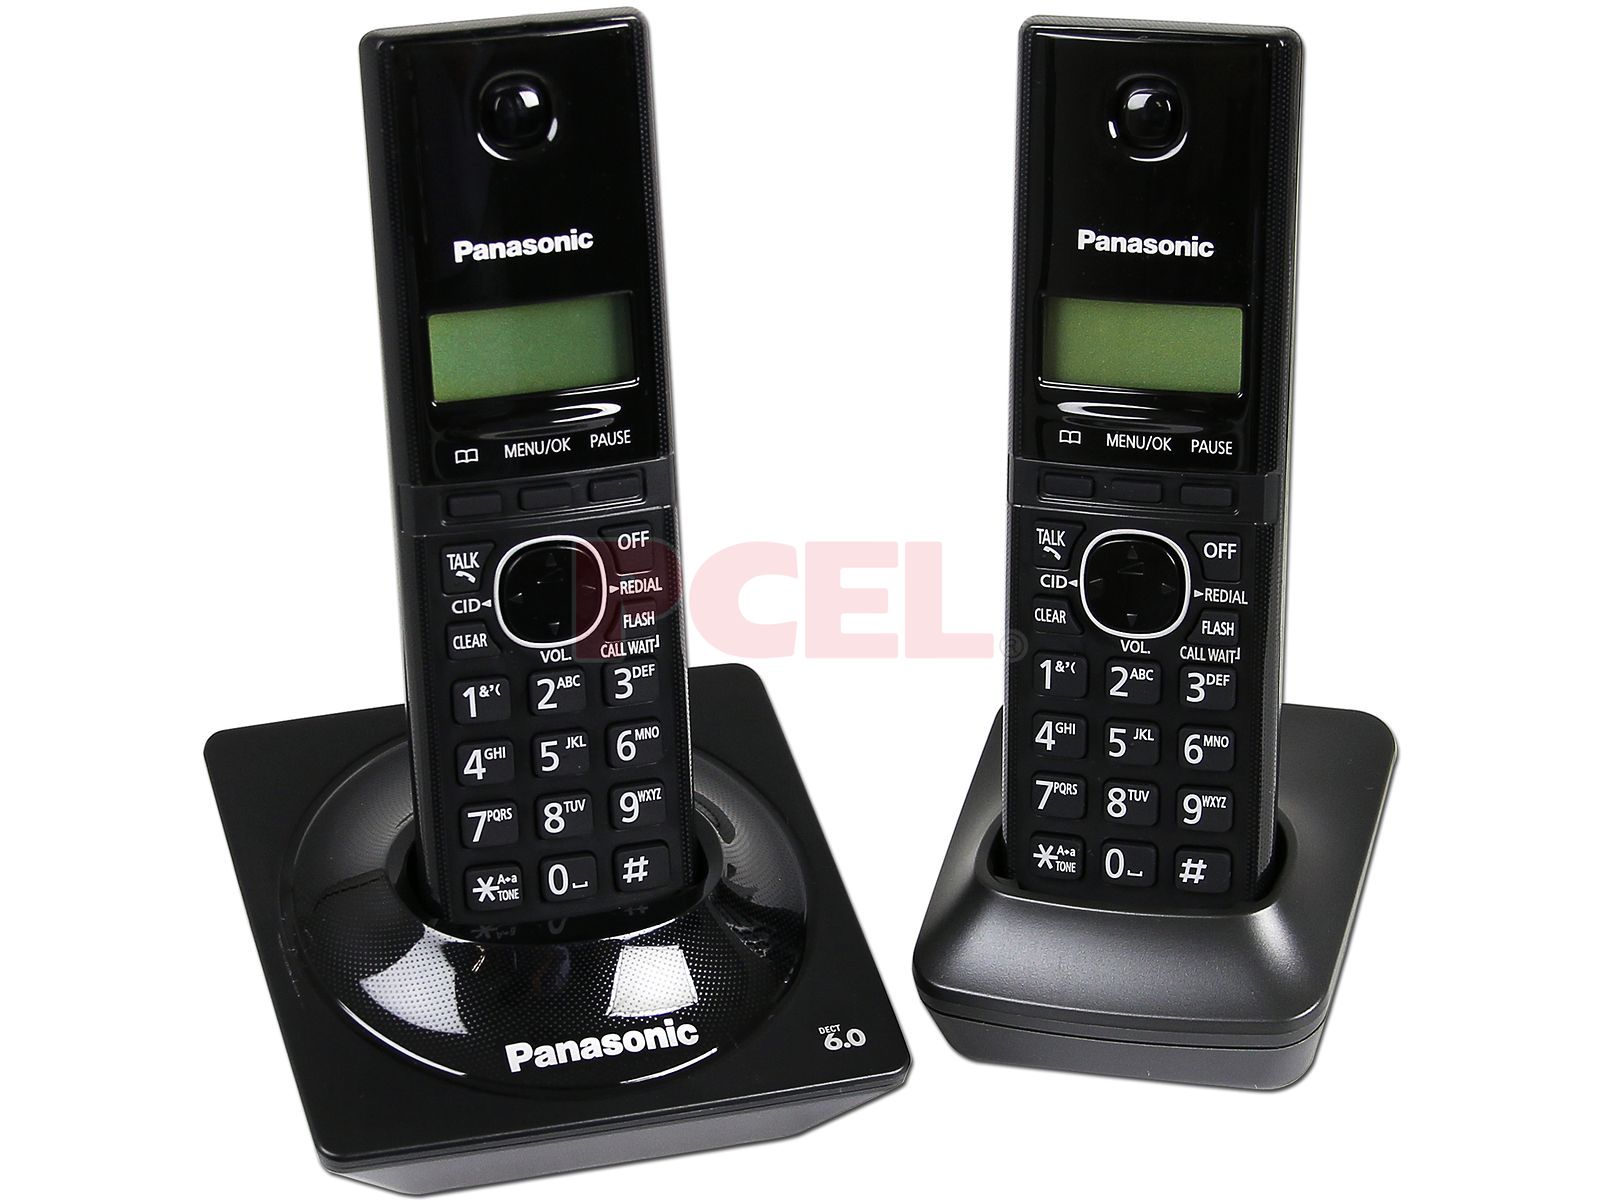 Teléfonos Inalámbricos DECT Panasonic